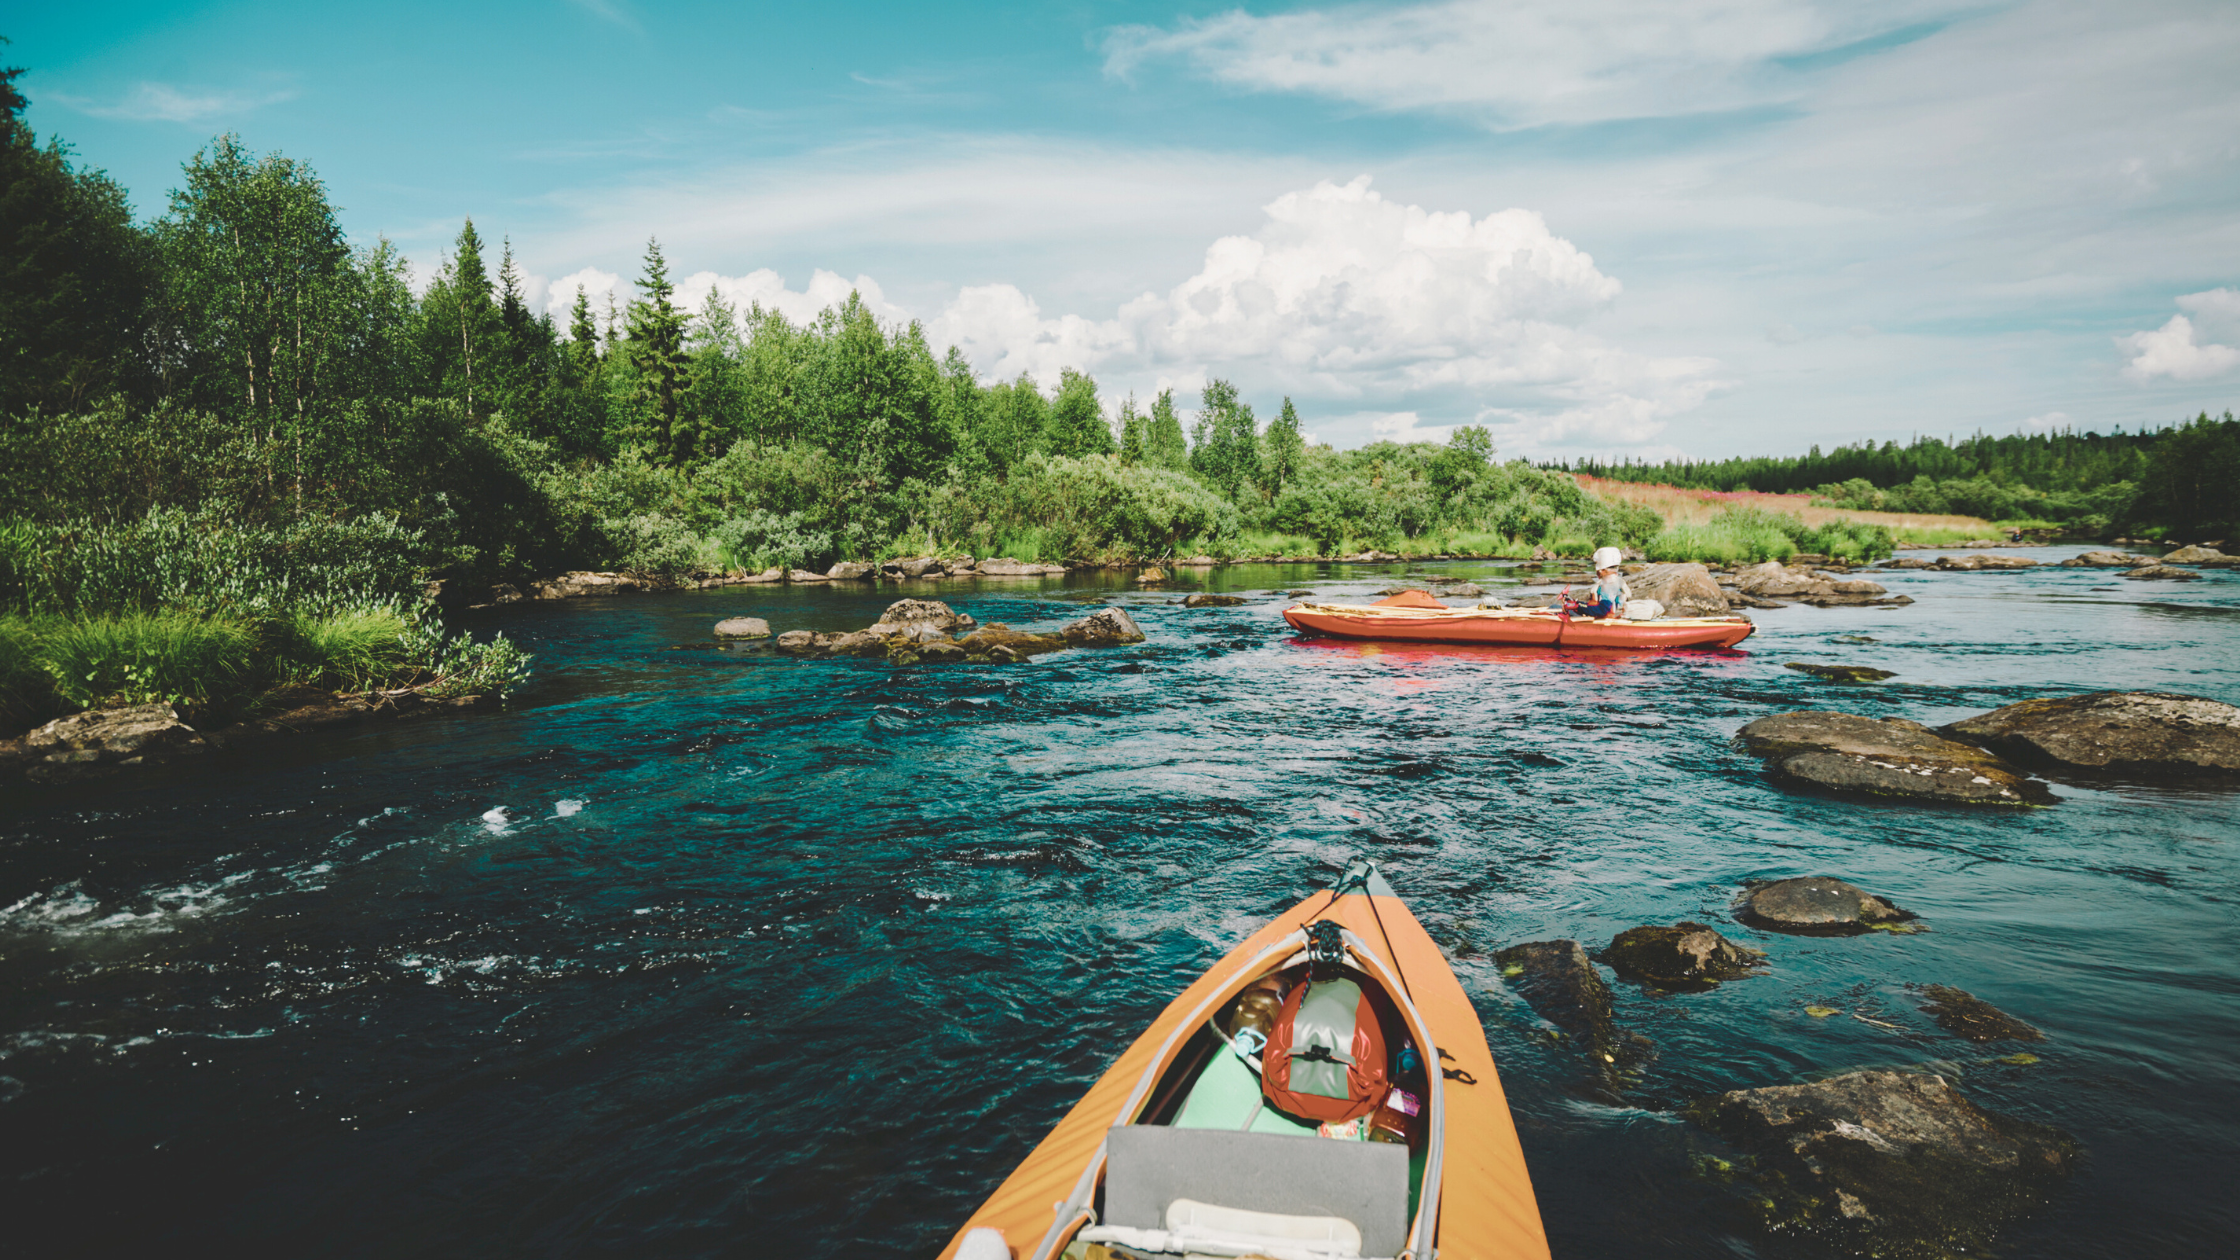 Kayaks Navigating A River with Rocks